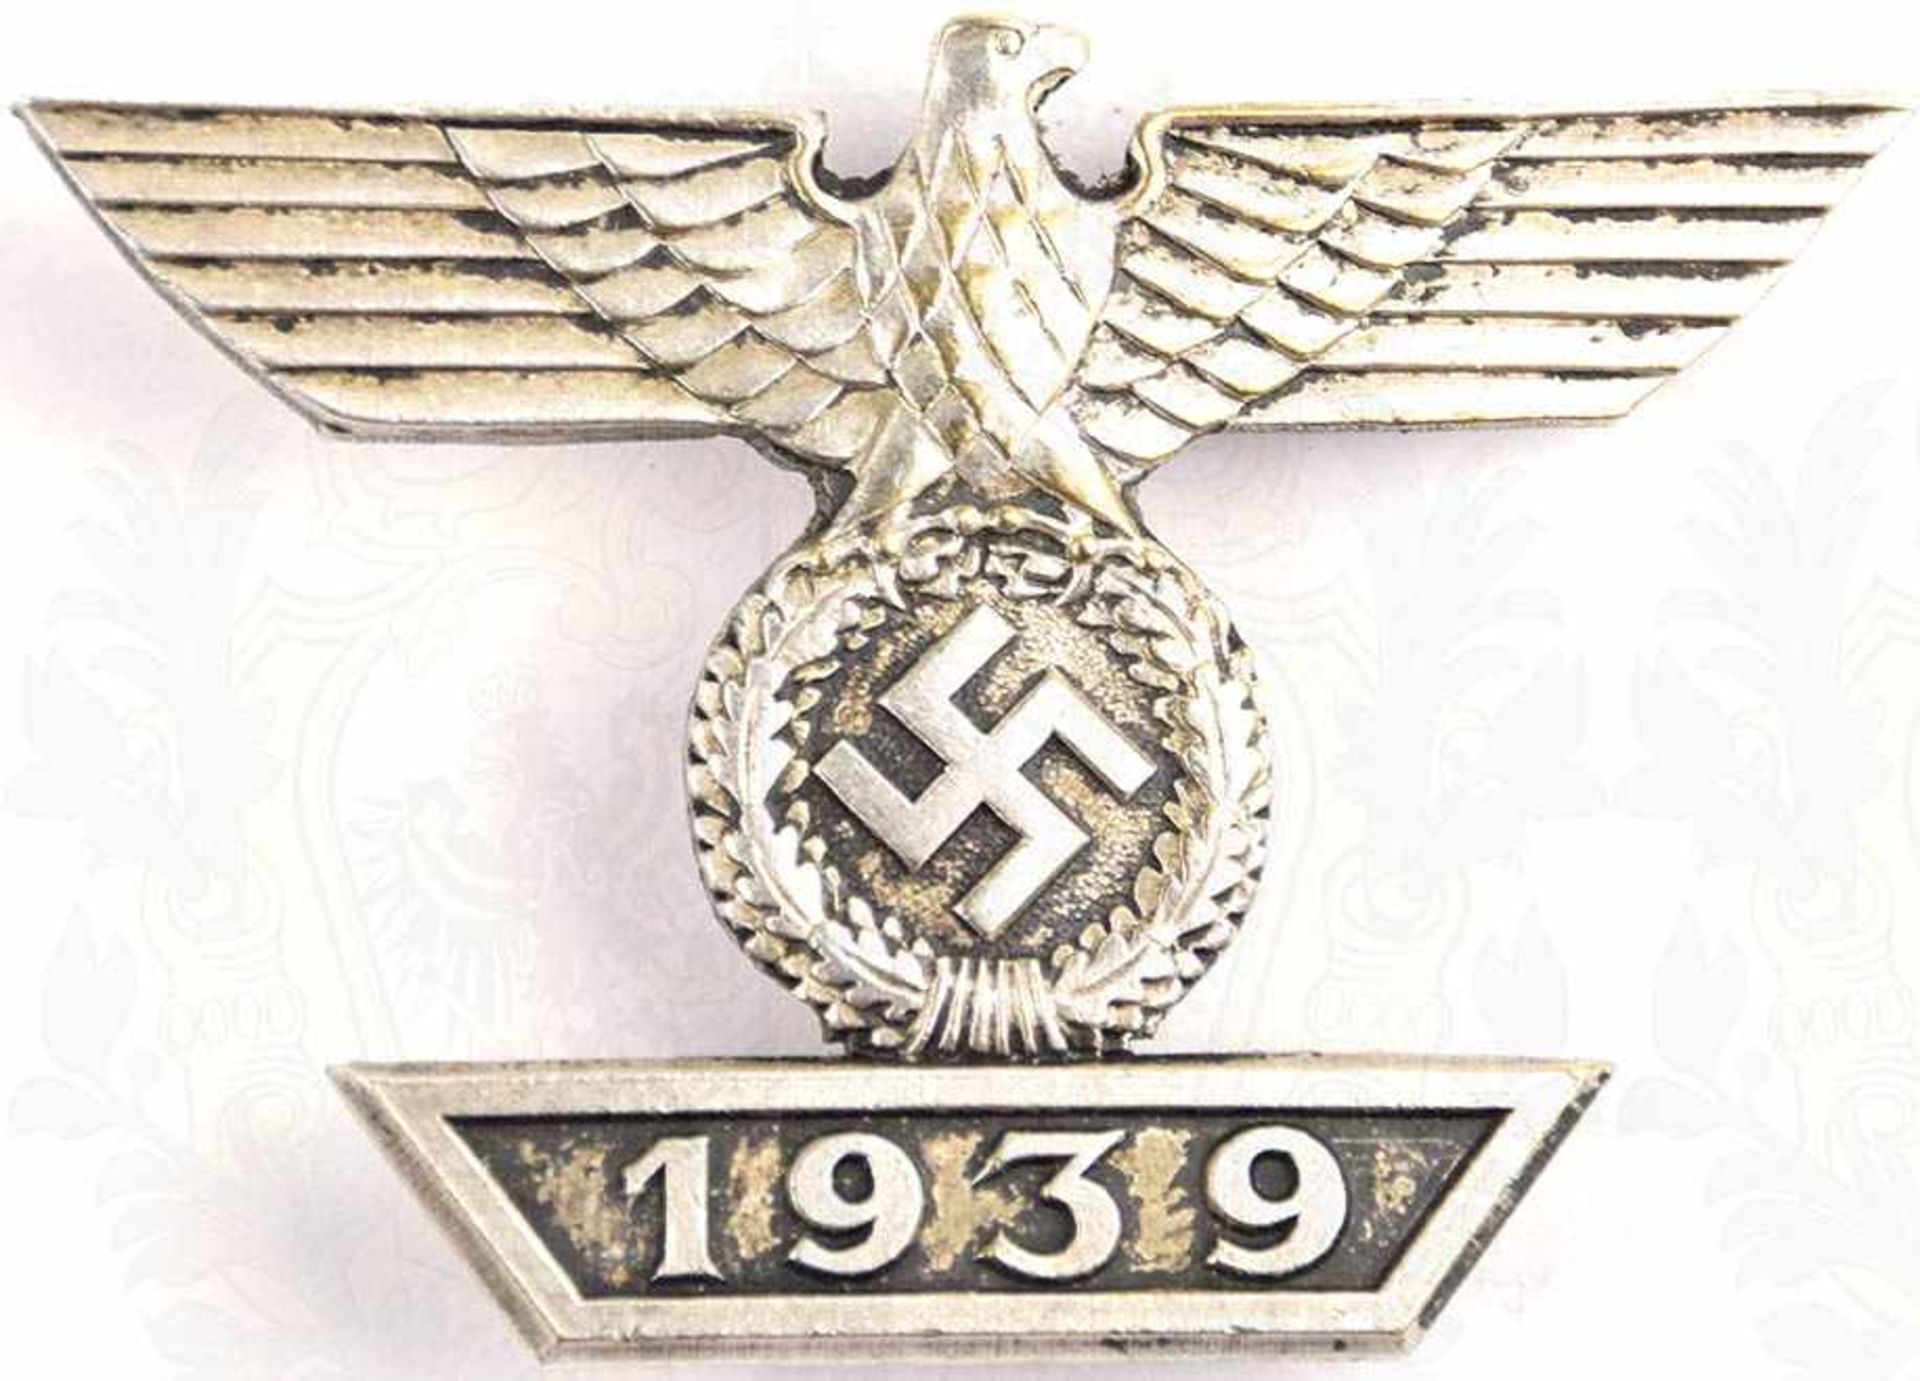 WIEDERHOLUNGSSPANGE 1939 ZUM EK I 1914, 2. Form, Weißmetall, silberfarben beschichtet, dünne